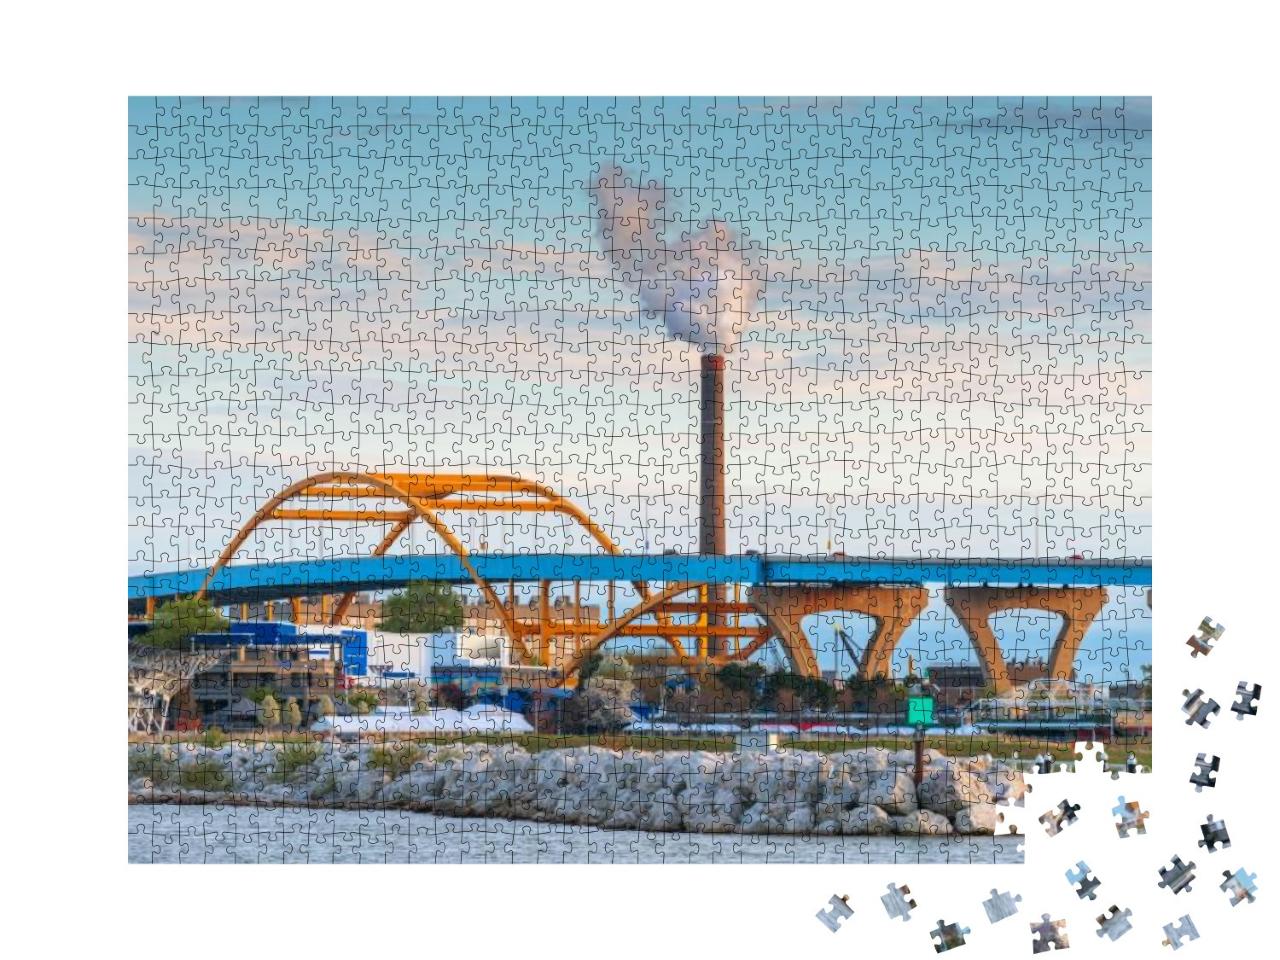 Milwaukee, Wisconsin, USA At Hoan Bridge & Lake Michigan... Jigsaw Puzzle with 1000 pieces